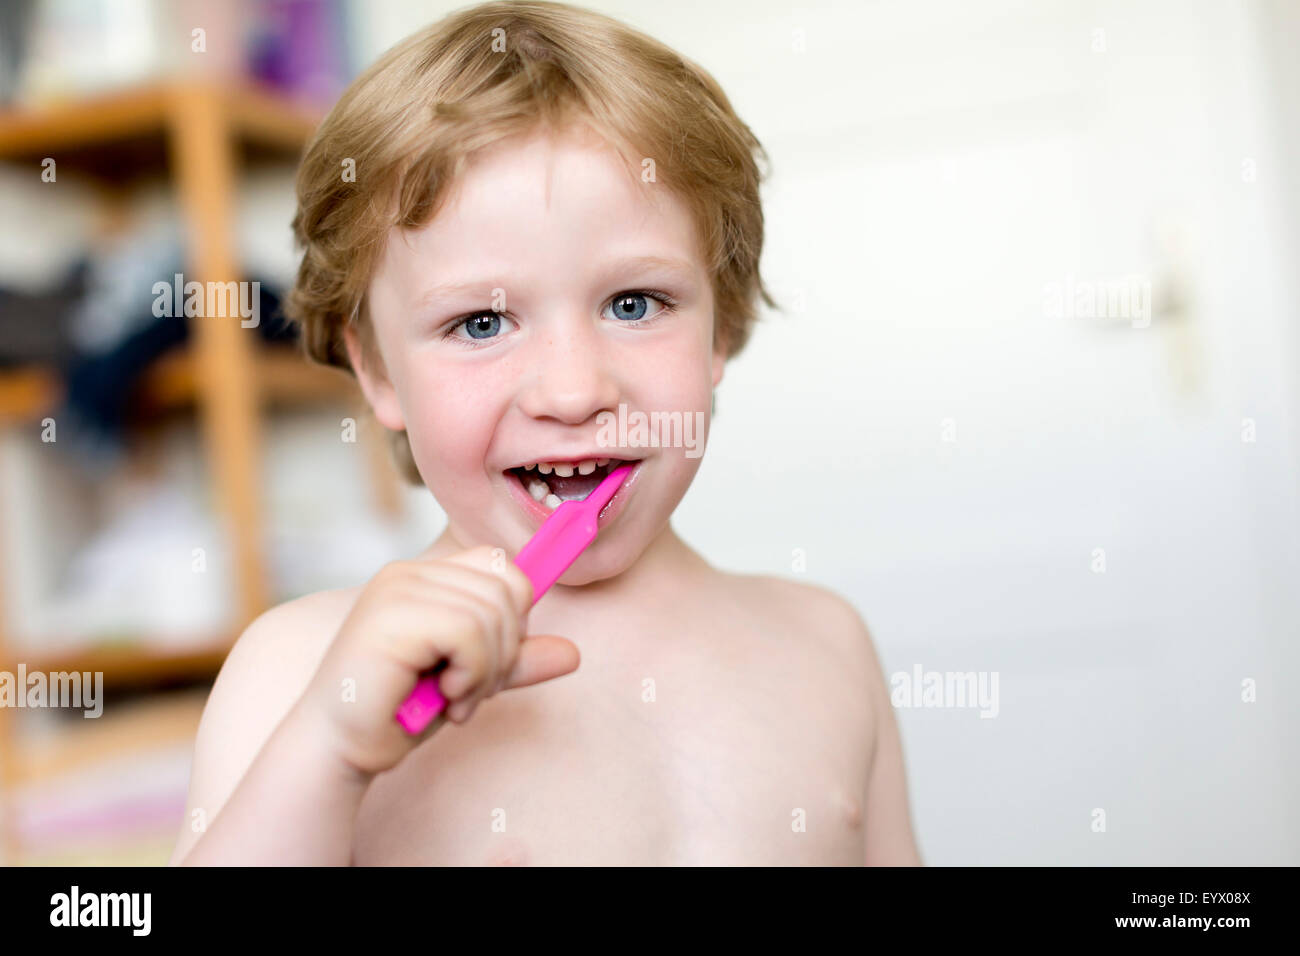 Young boy, 4 years, brushing his teeth Stock Photo